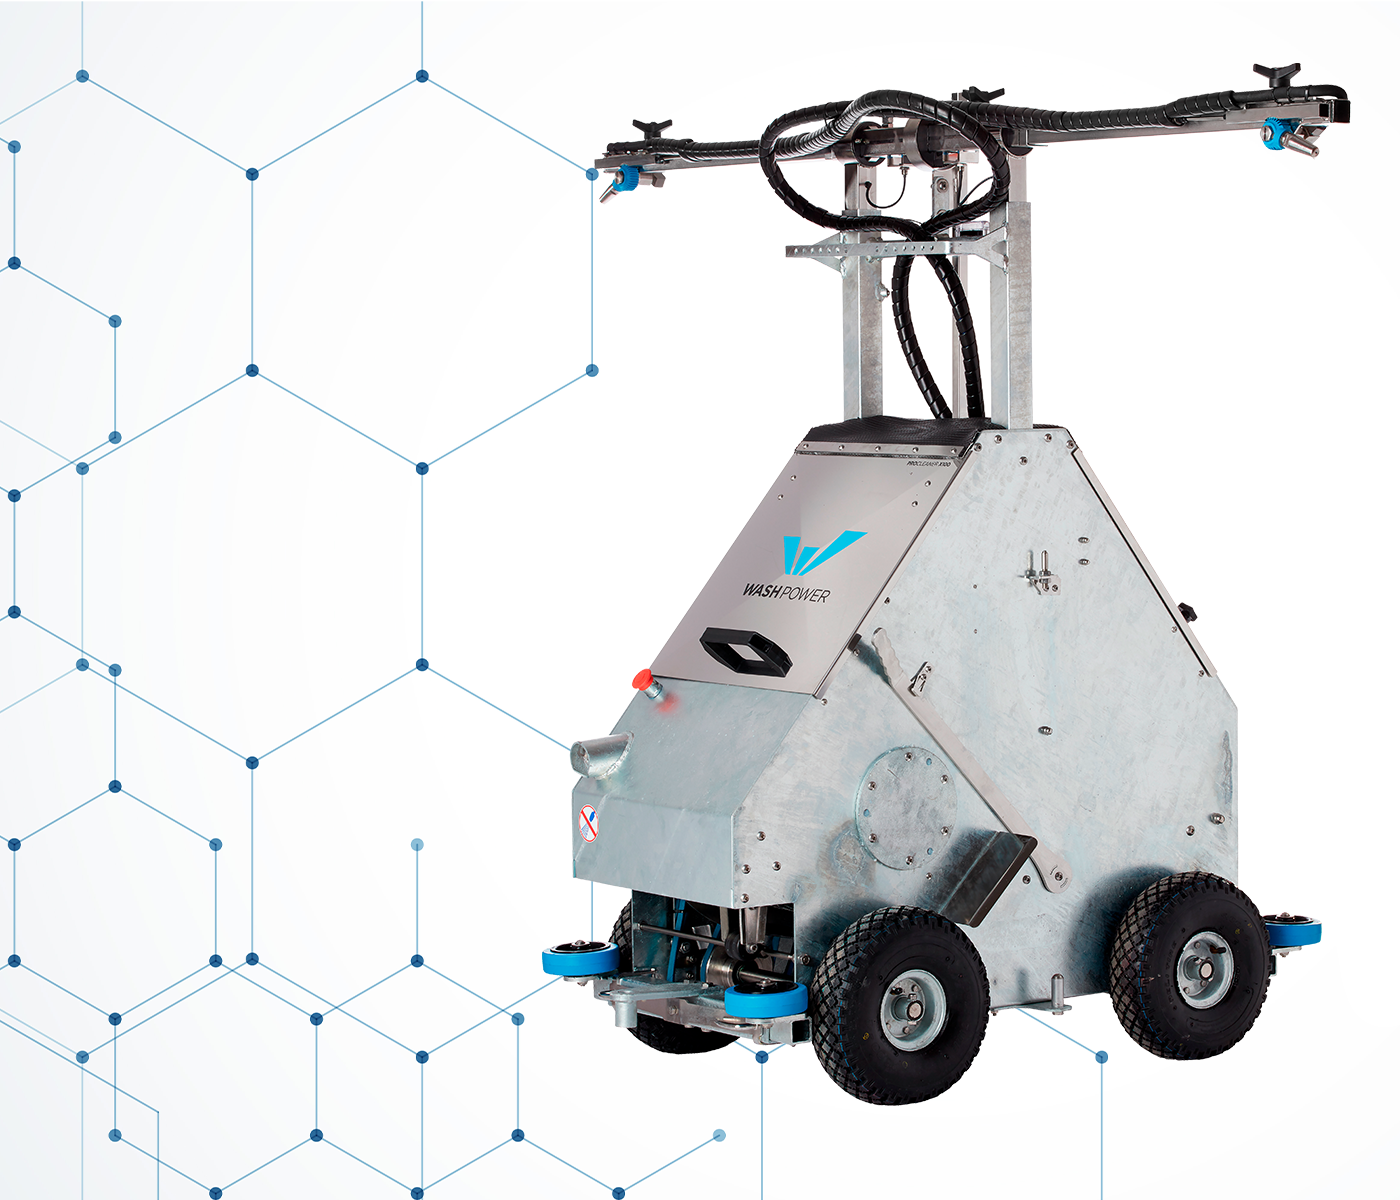 Robot de Lavado PROCLEANER X100 de Aviporc – A la vanguardia de la limpieza inteligente